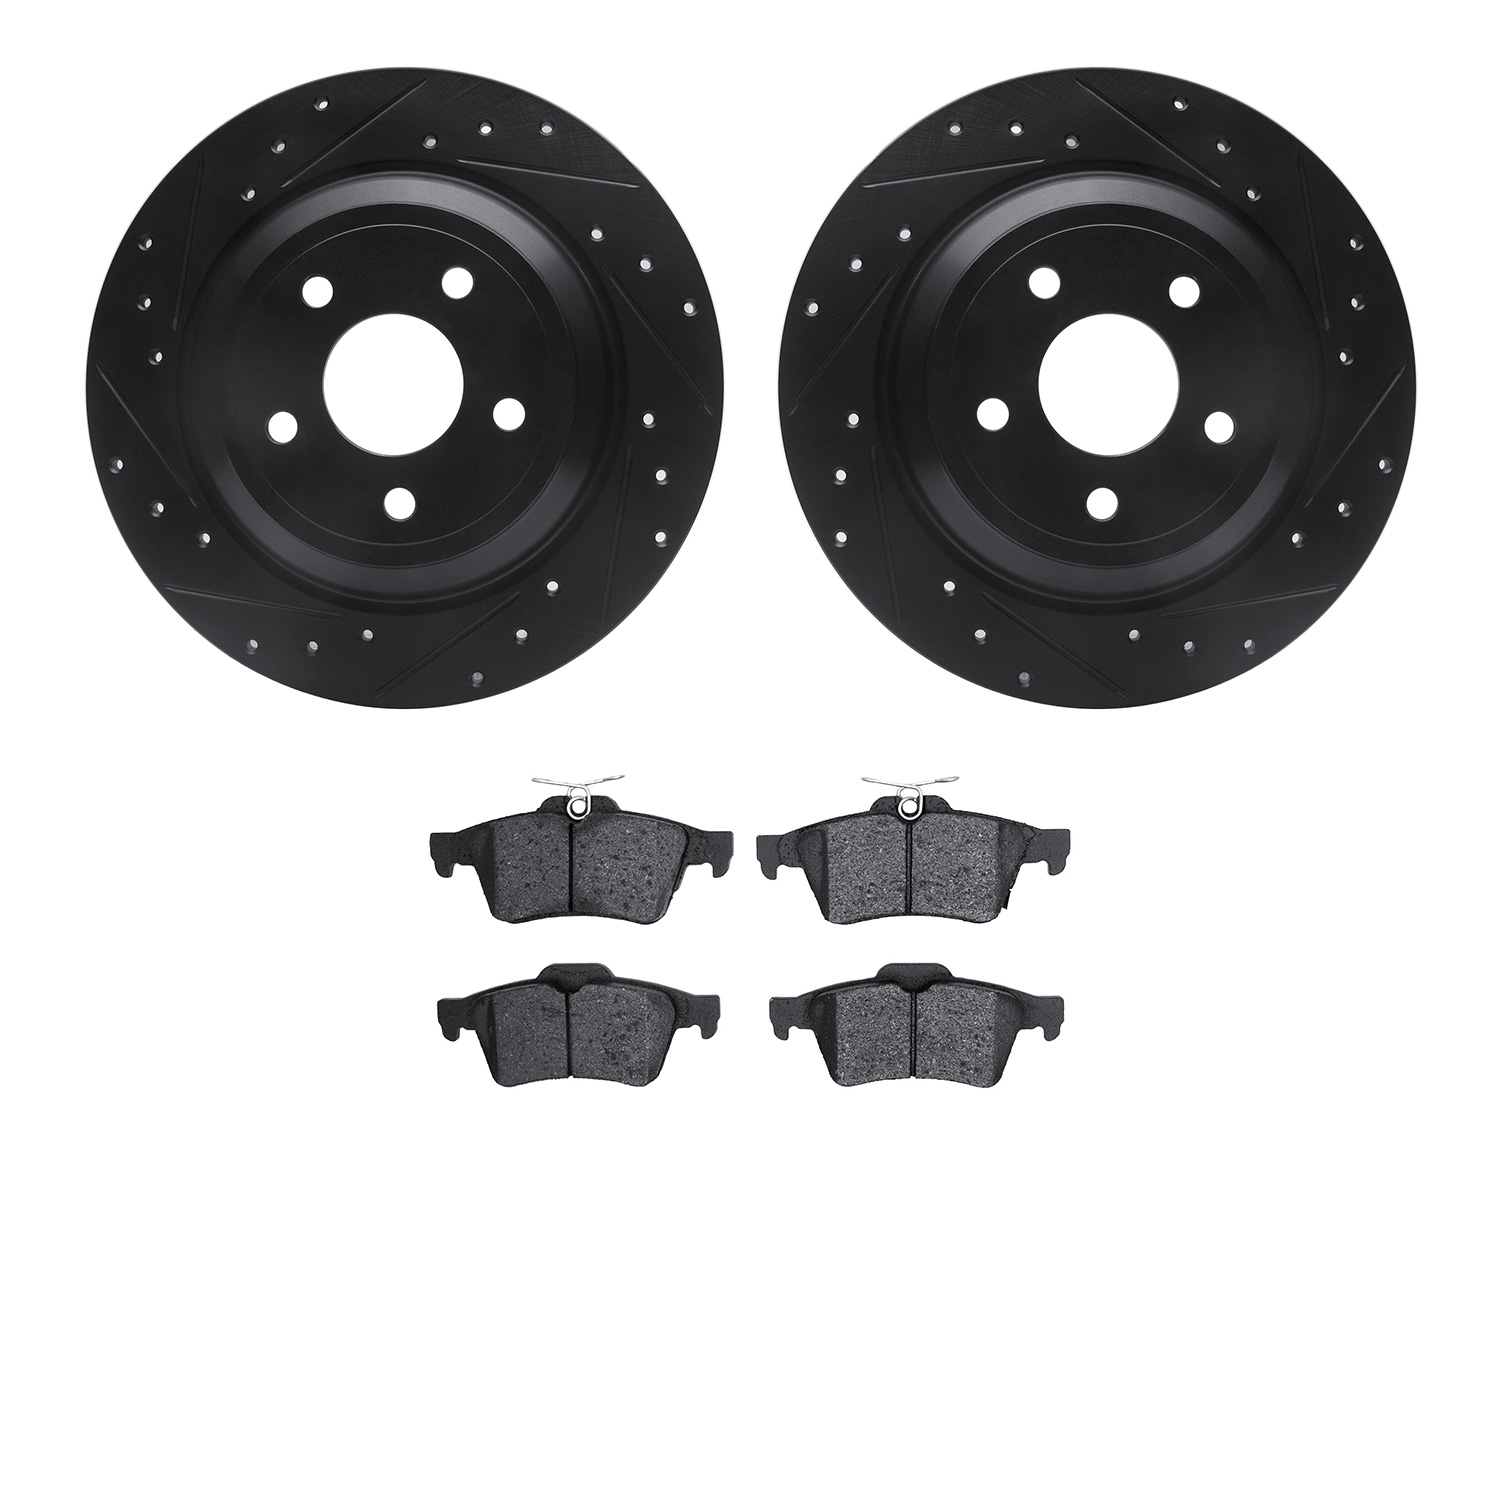 8302-54206 Drilled/Slotted Brake Rotors with 3000-Series Ceramic Brake Pads Kit [Black], 2016-2018 Ford/Lincoln/Mercury/Mazda, P